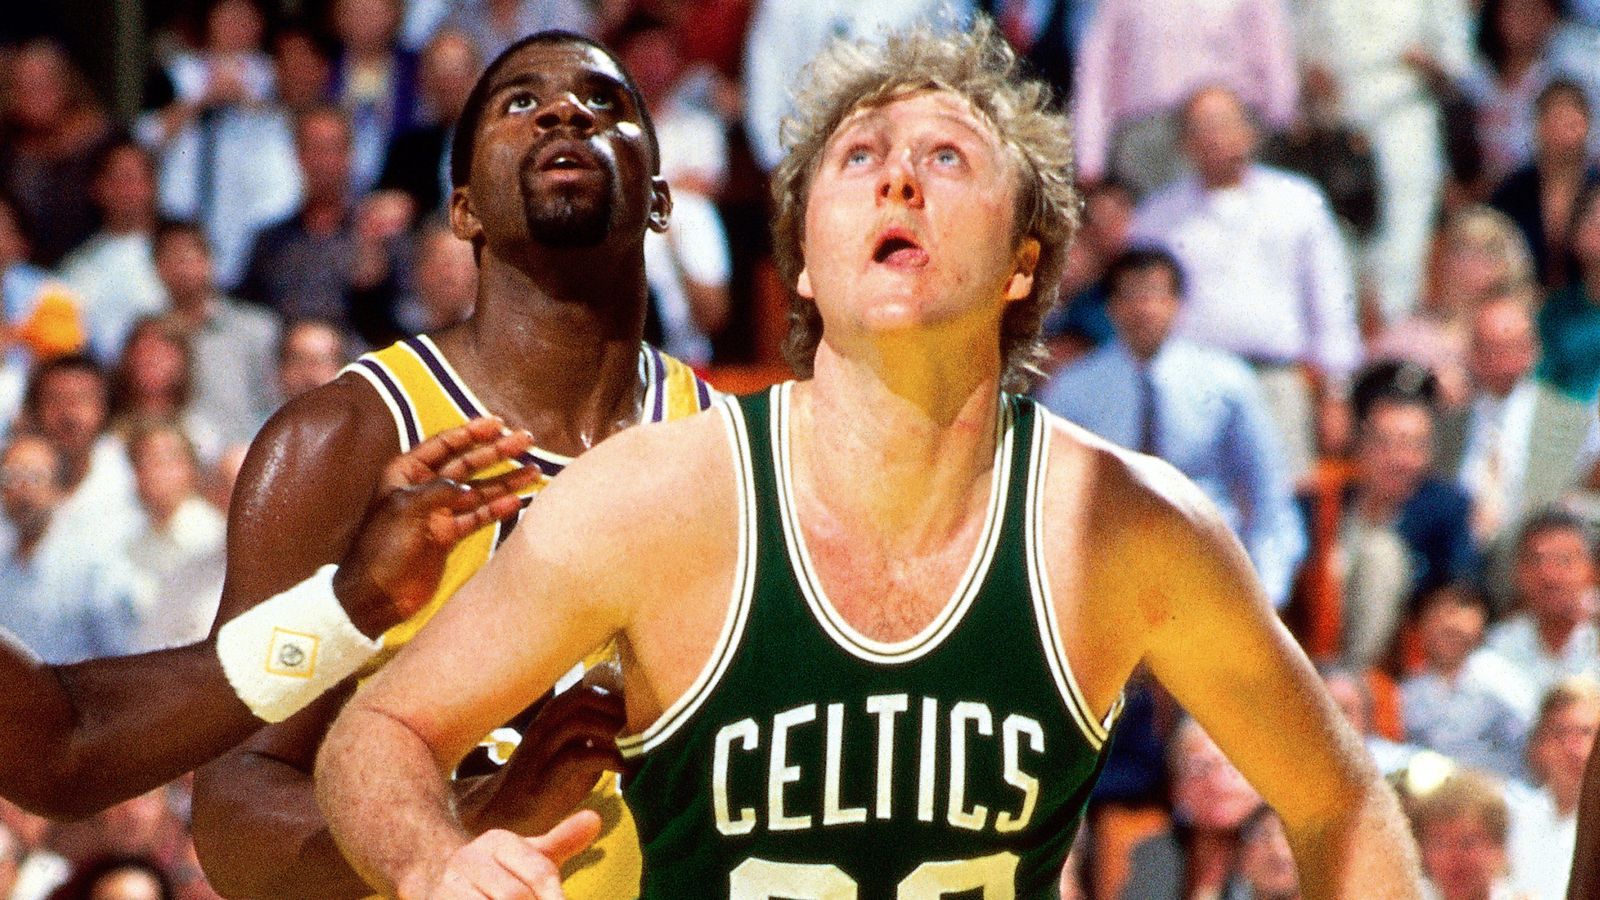 HD wallpaper: NBA, basketball, Larry Bird, Boston Celtics, Magic Johnson